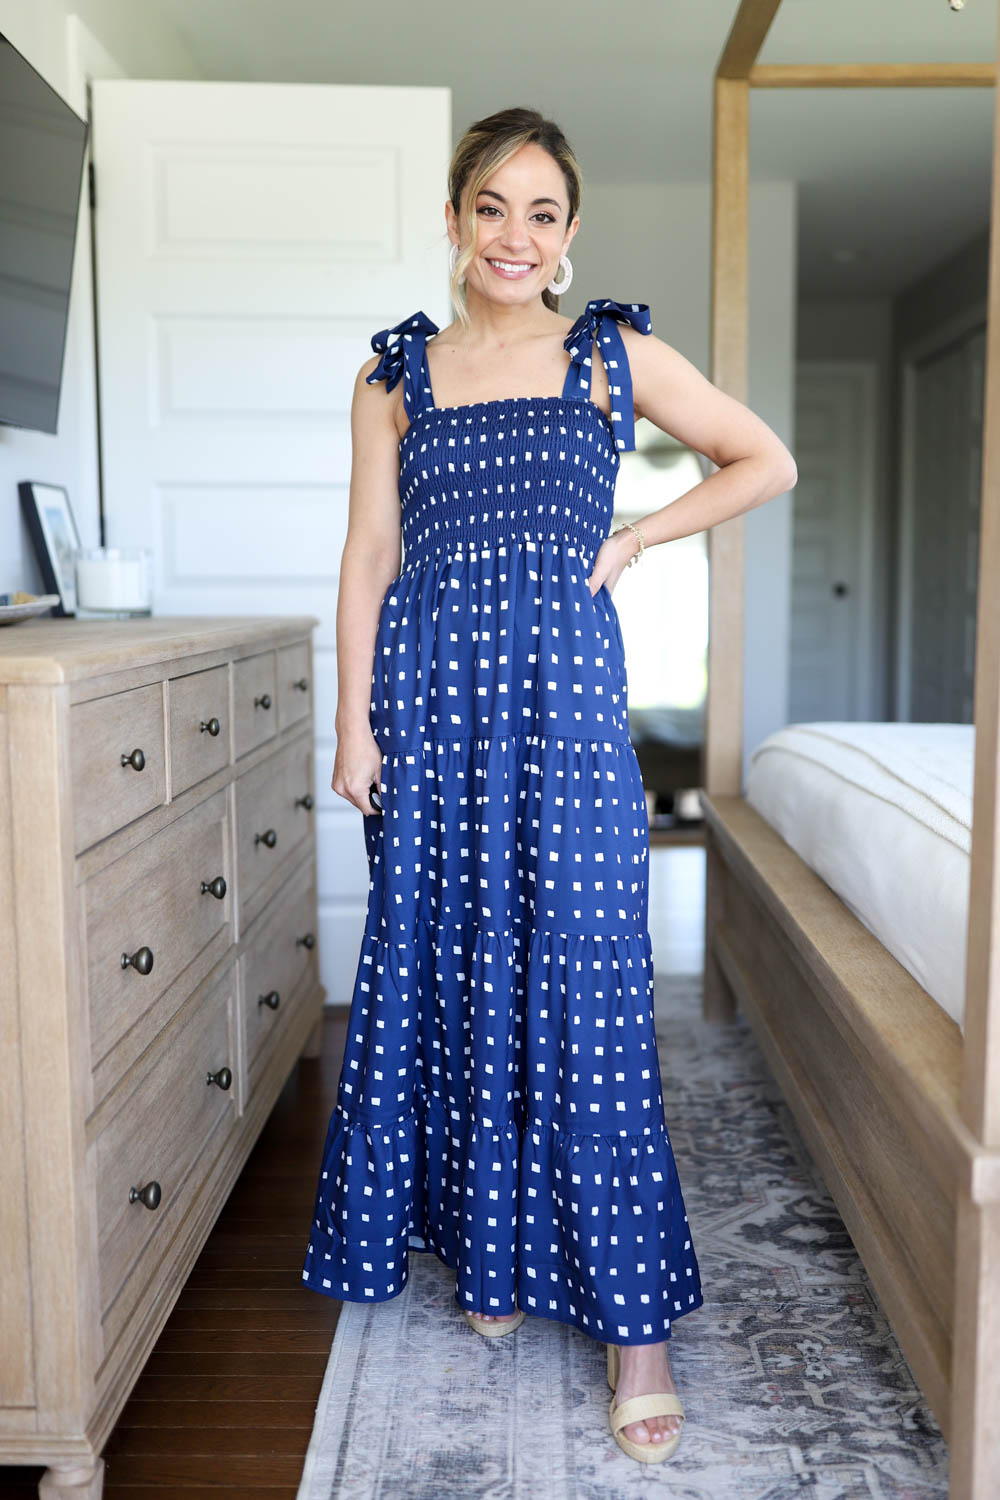 Petite- friendly maxi dress from Amazon | summer dresses | petite dresses | summer outfits 